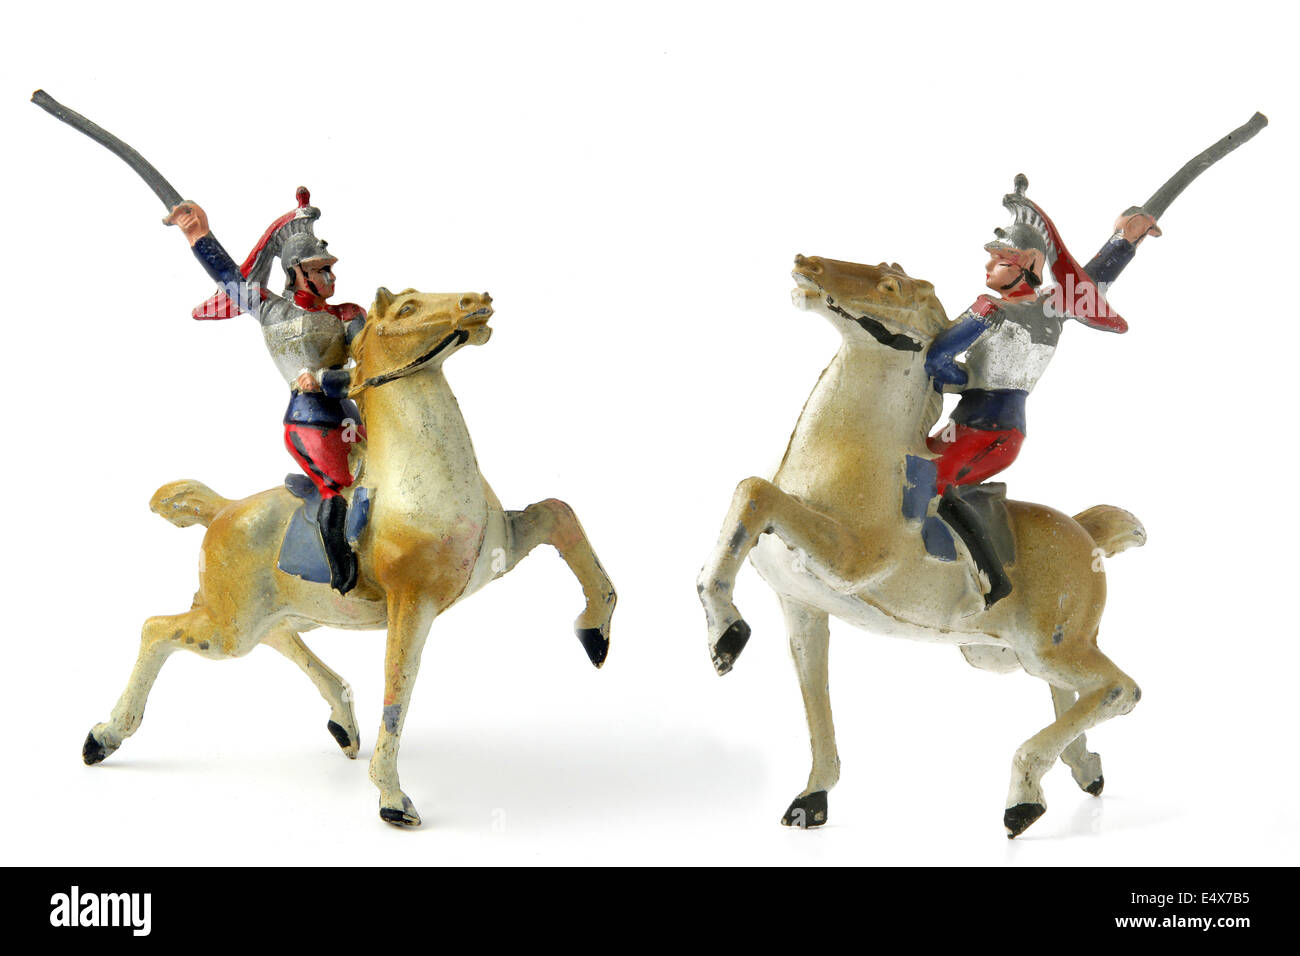 Toy knights on horses Stock Photo